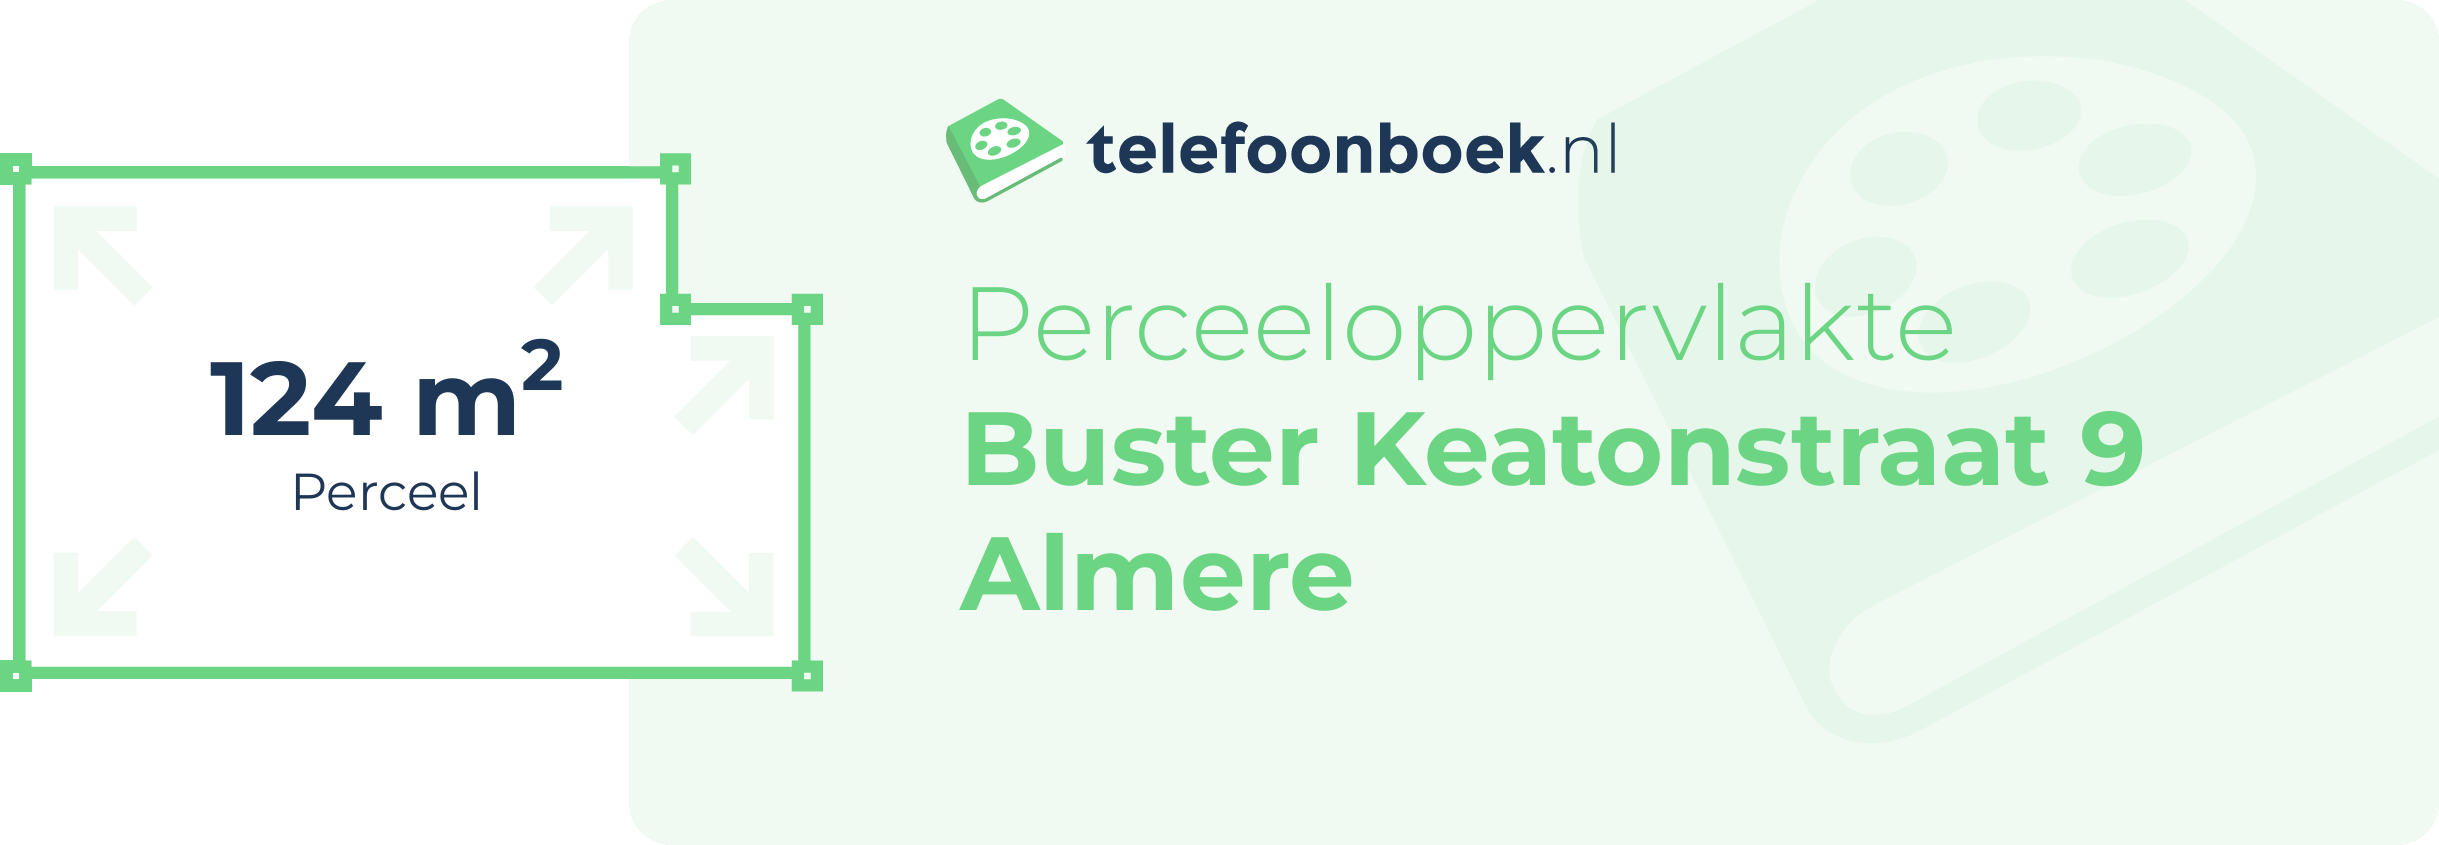 Perceeloppervlakte Buster Keatonstraat 9 Almere